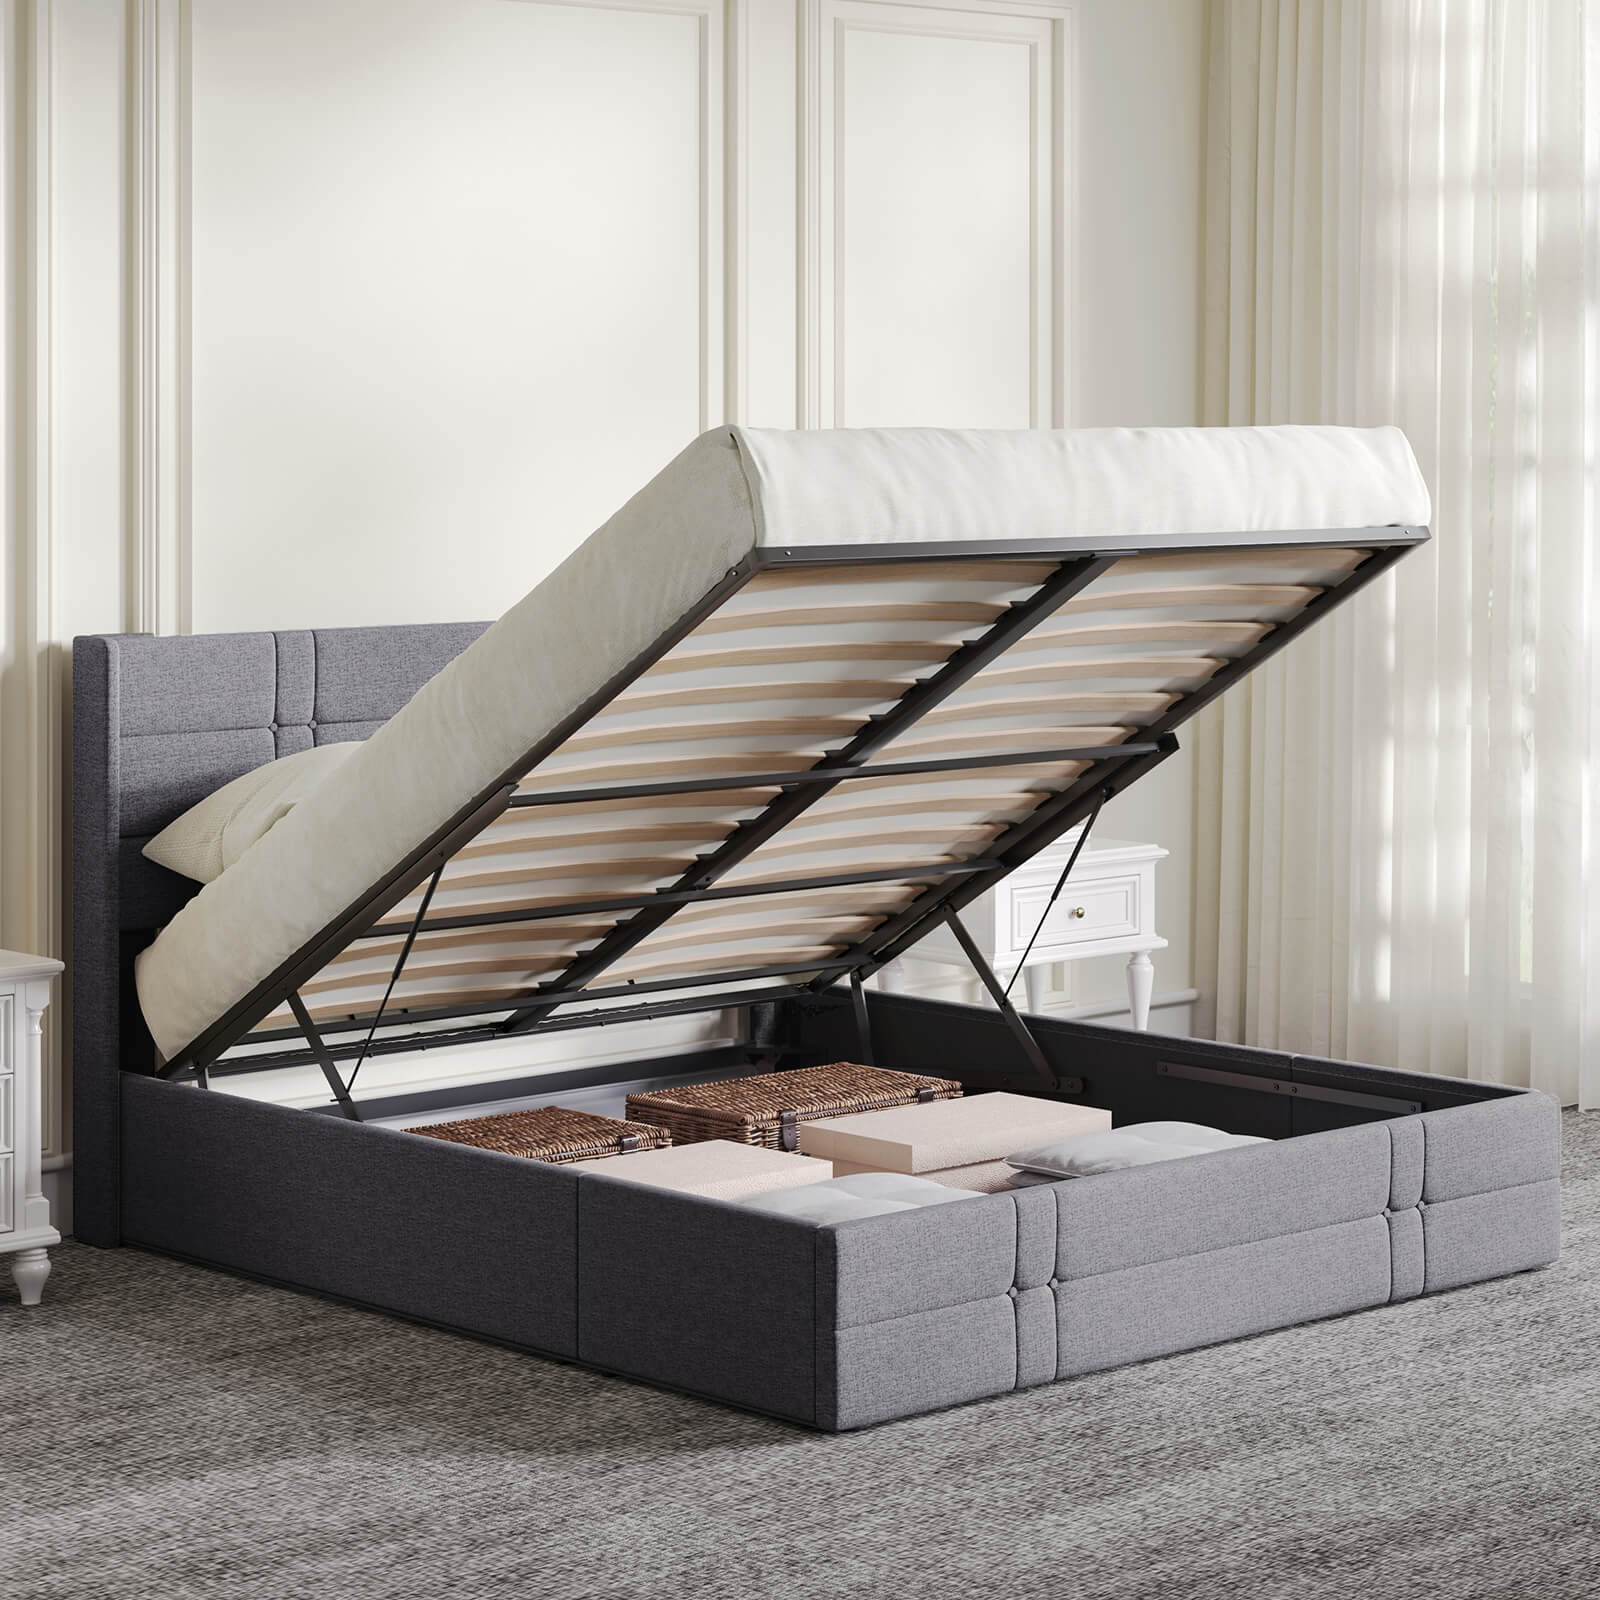 Novilla Robust Bed Frame with Lift Storage